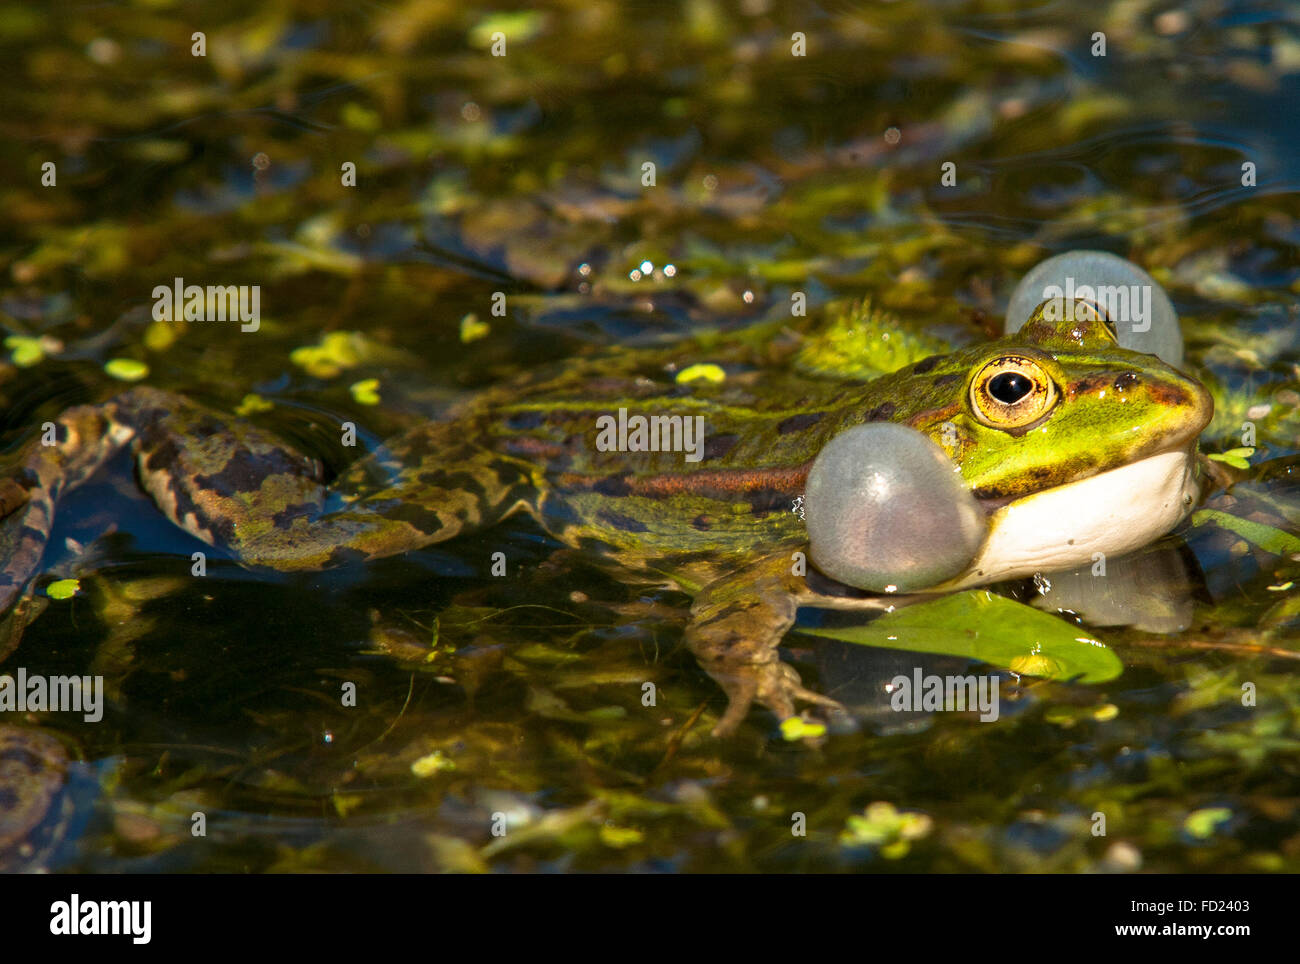 Europe, Germany, North Rhine-Westphalia, Lower Rhine Region, Edible Frog (lat. Rana kl. esculenta) with vocal sac. Stock Photo